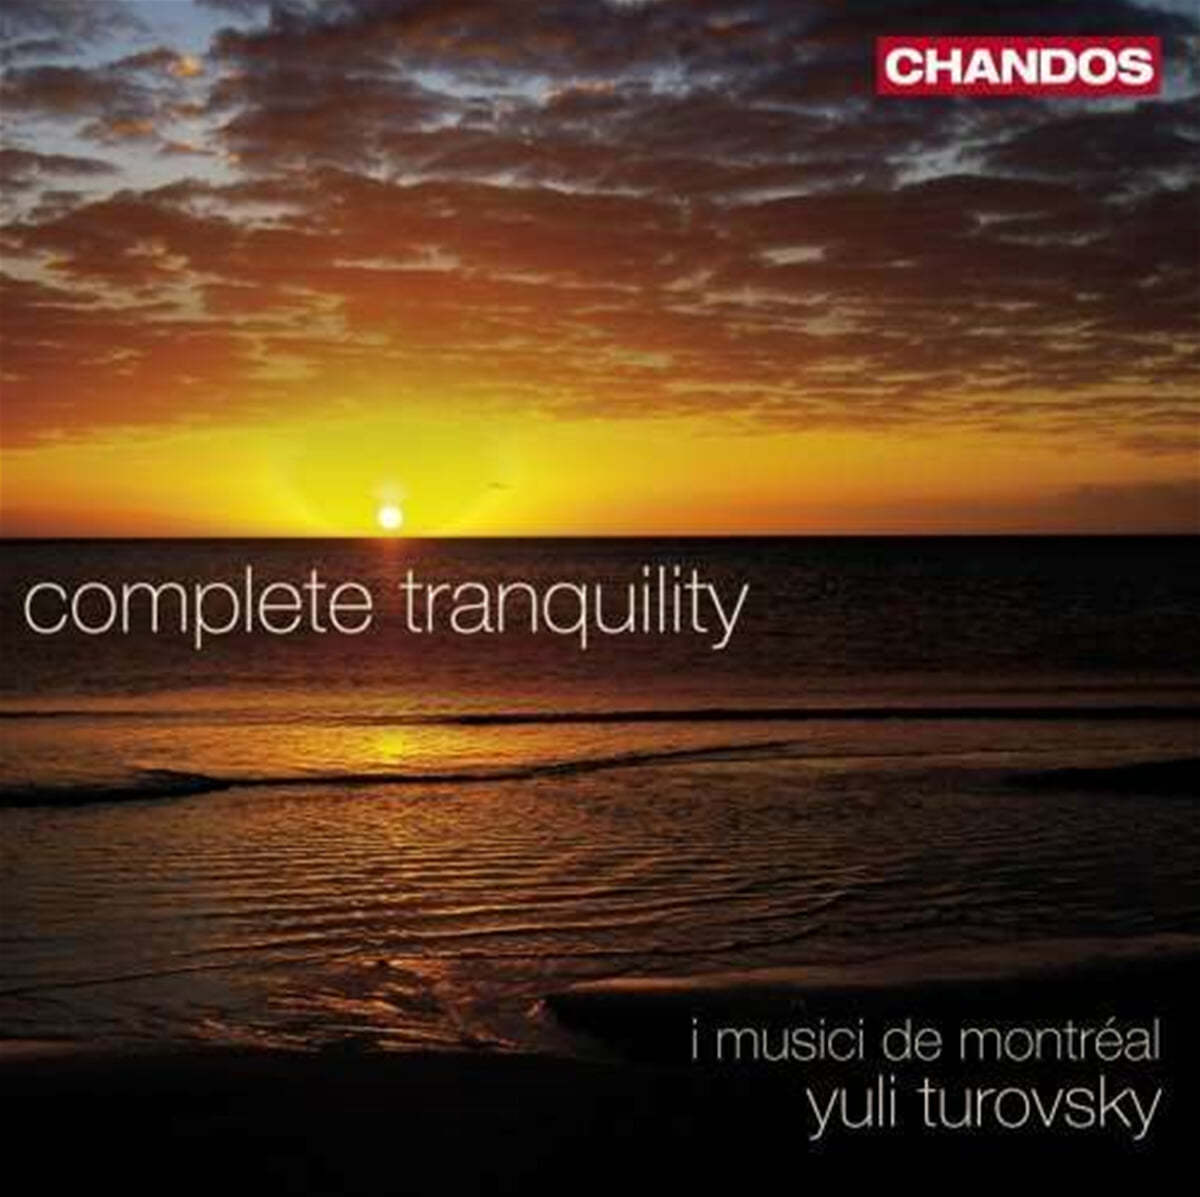 I Musici de Montreal 바흐 / 비발디 / 드보르작 / 쇼스타코비치: 실내악 오케스트라 연주 버전 (Bach / Vivaldi / Dvorak / Shostakovich: Complete Tranquility) 